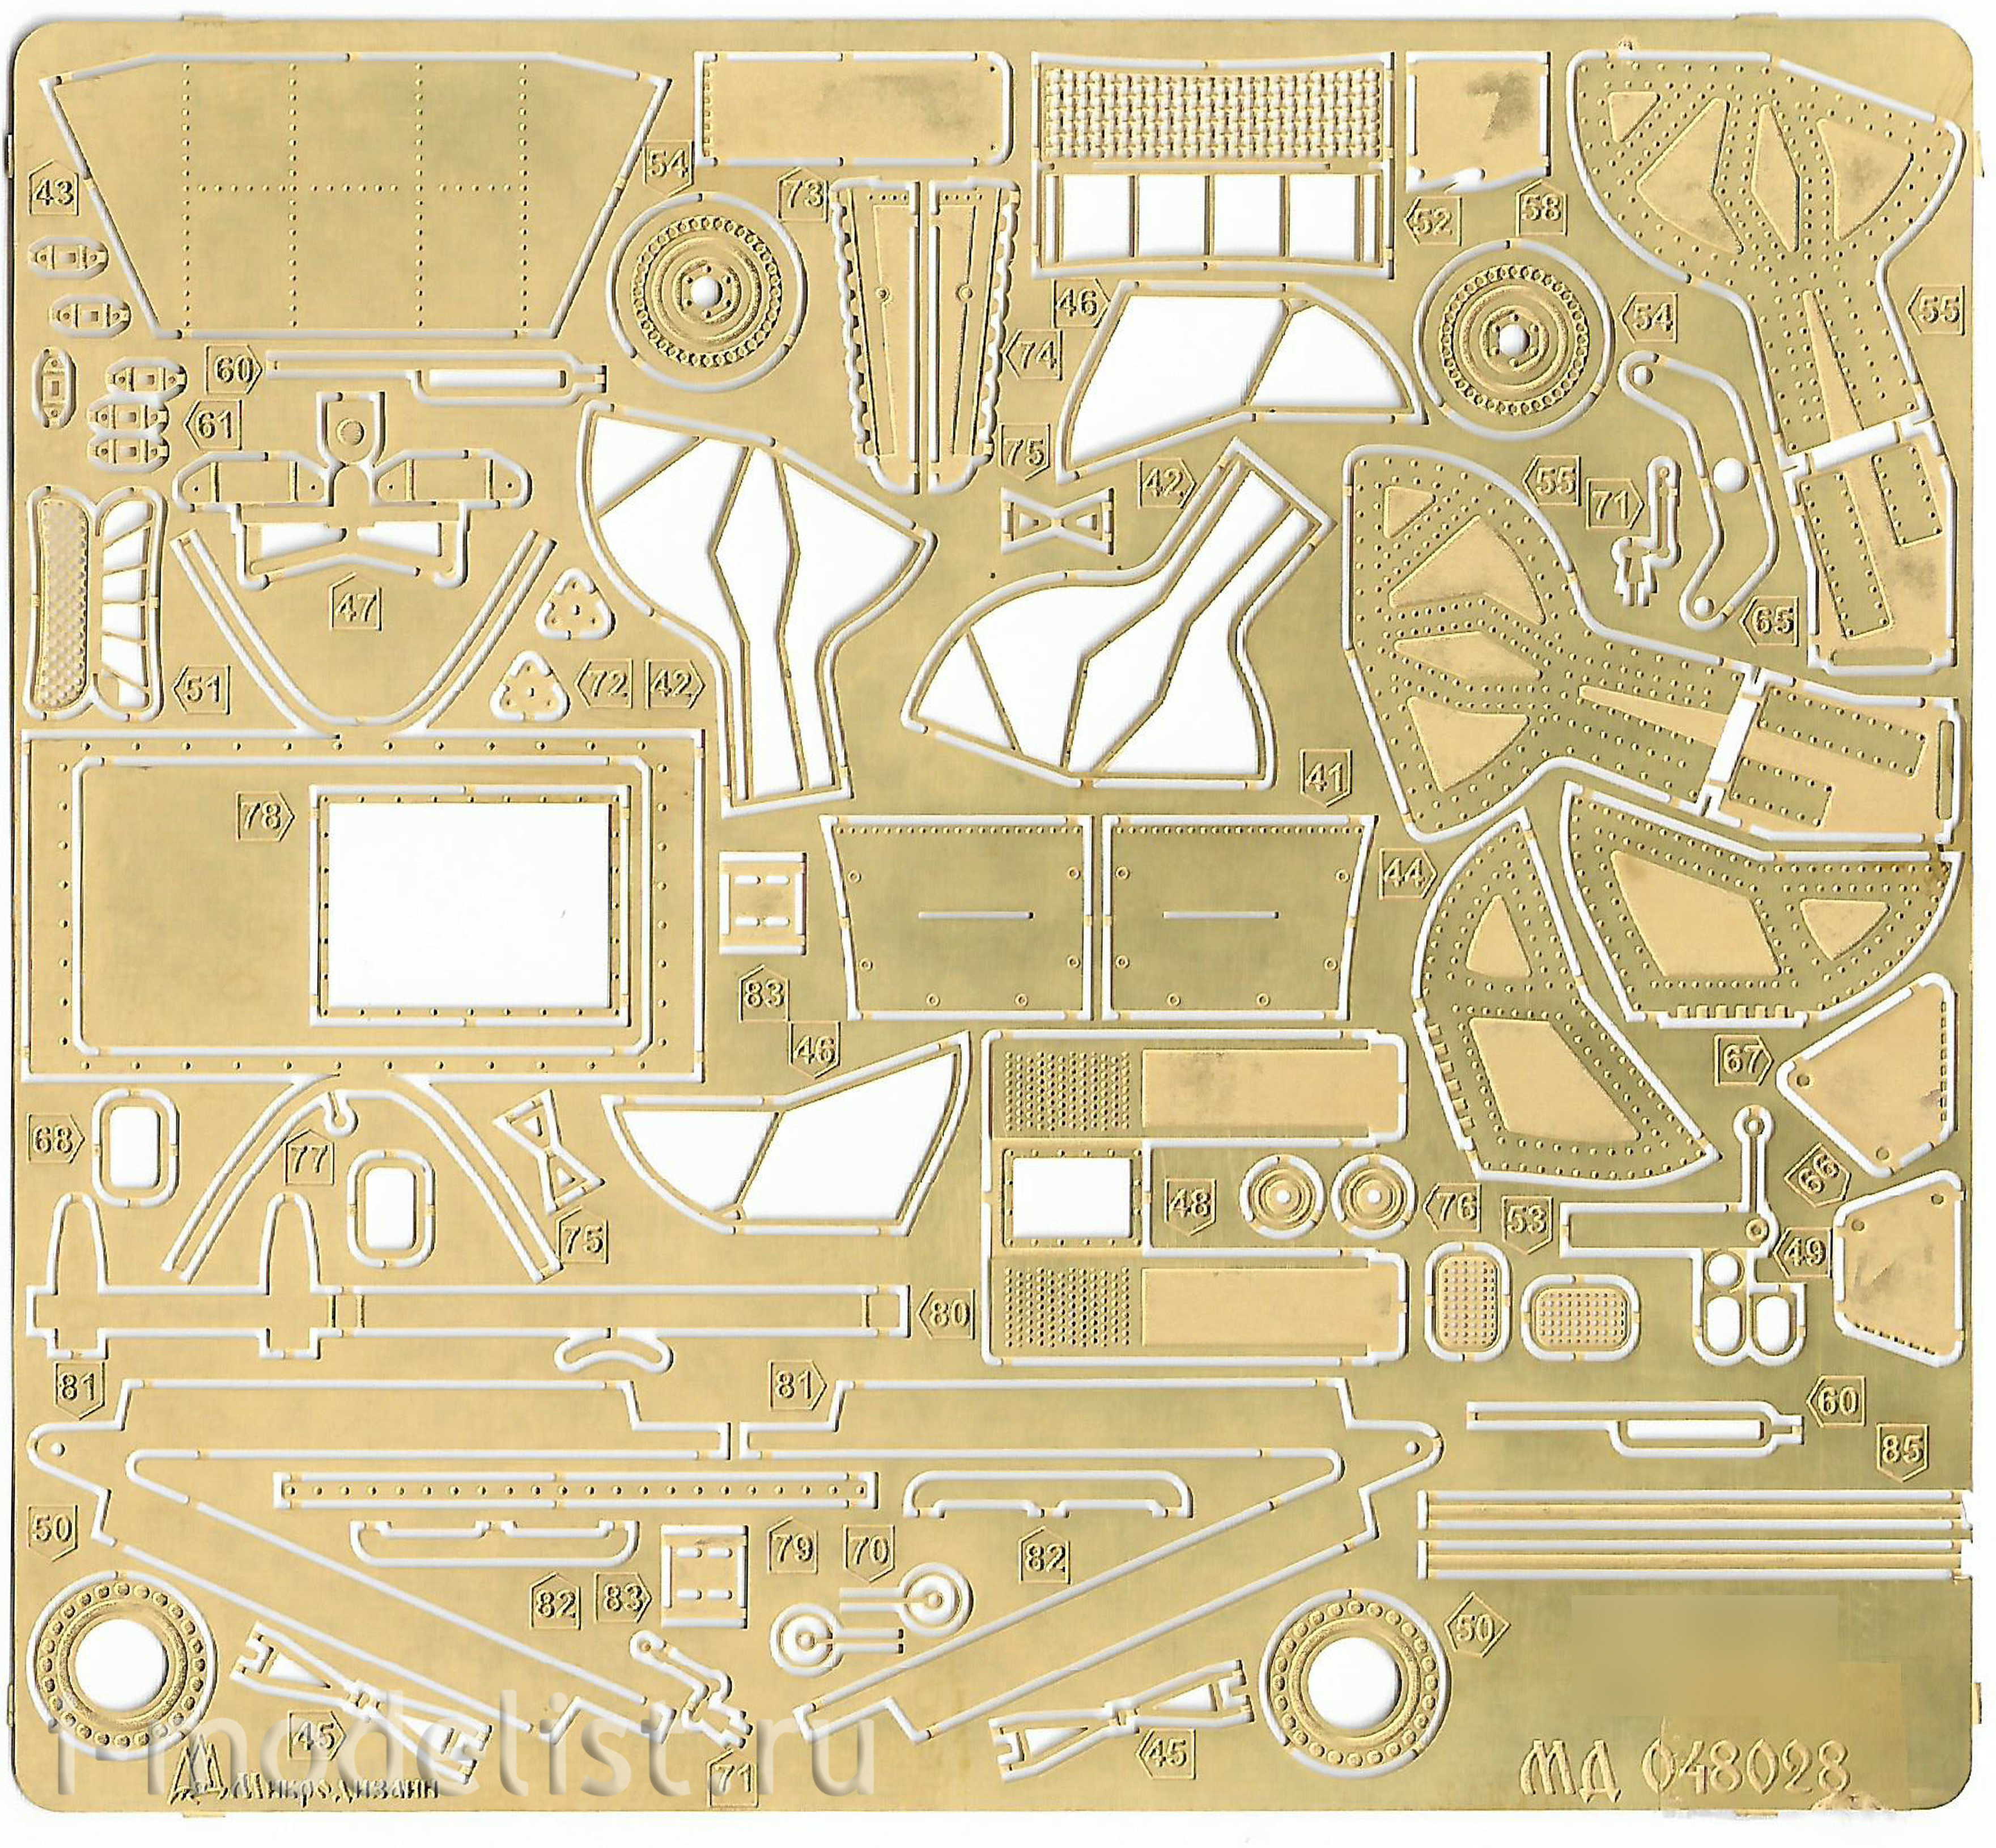 048028 Microdesign 1/48 Color instrument panels Yak-9 all types (ICM, ARC, Modeler)